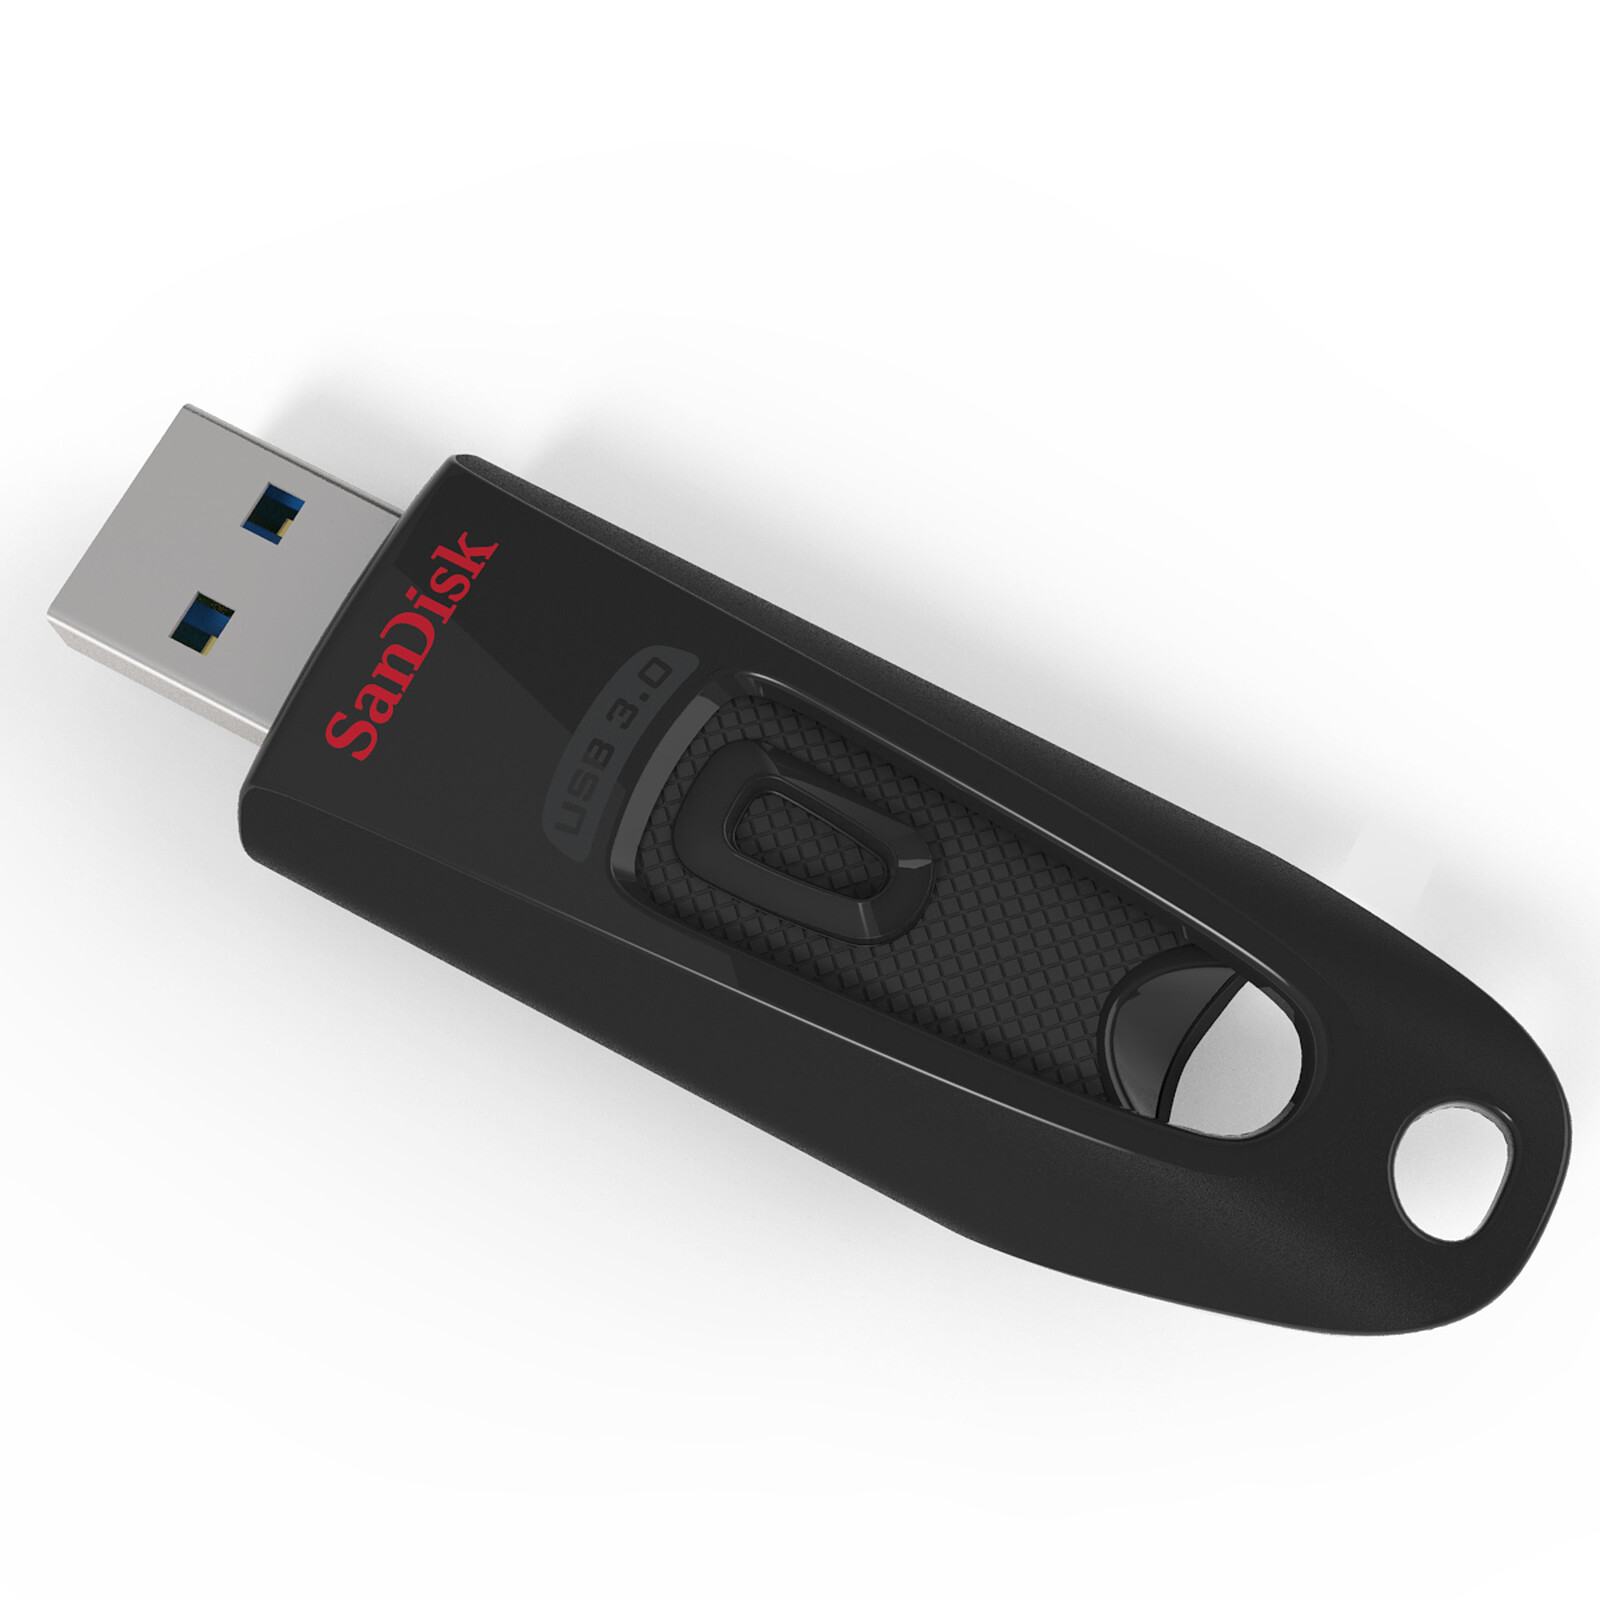 Clé USB 256 Go (ssd) - Clé USB 256 Go - Clé USB Solid State - Clé USB SSD  